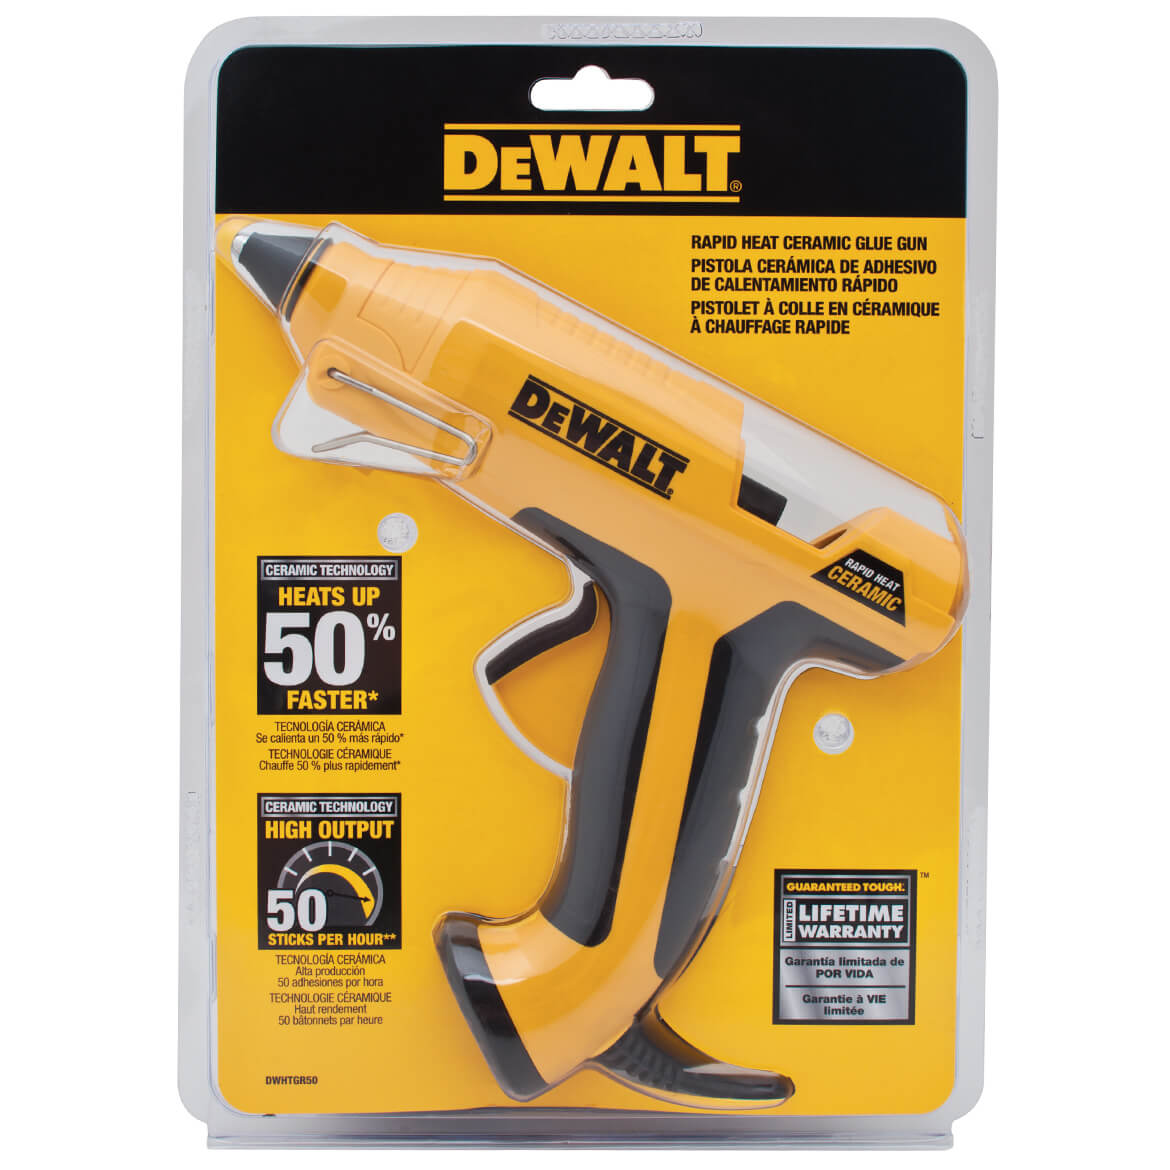 Dewalt Rapid Heat Ceramic Glue Guns. Brand new. - tools - by owner